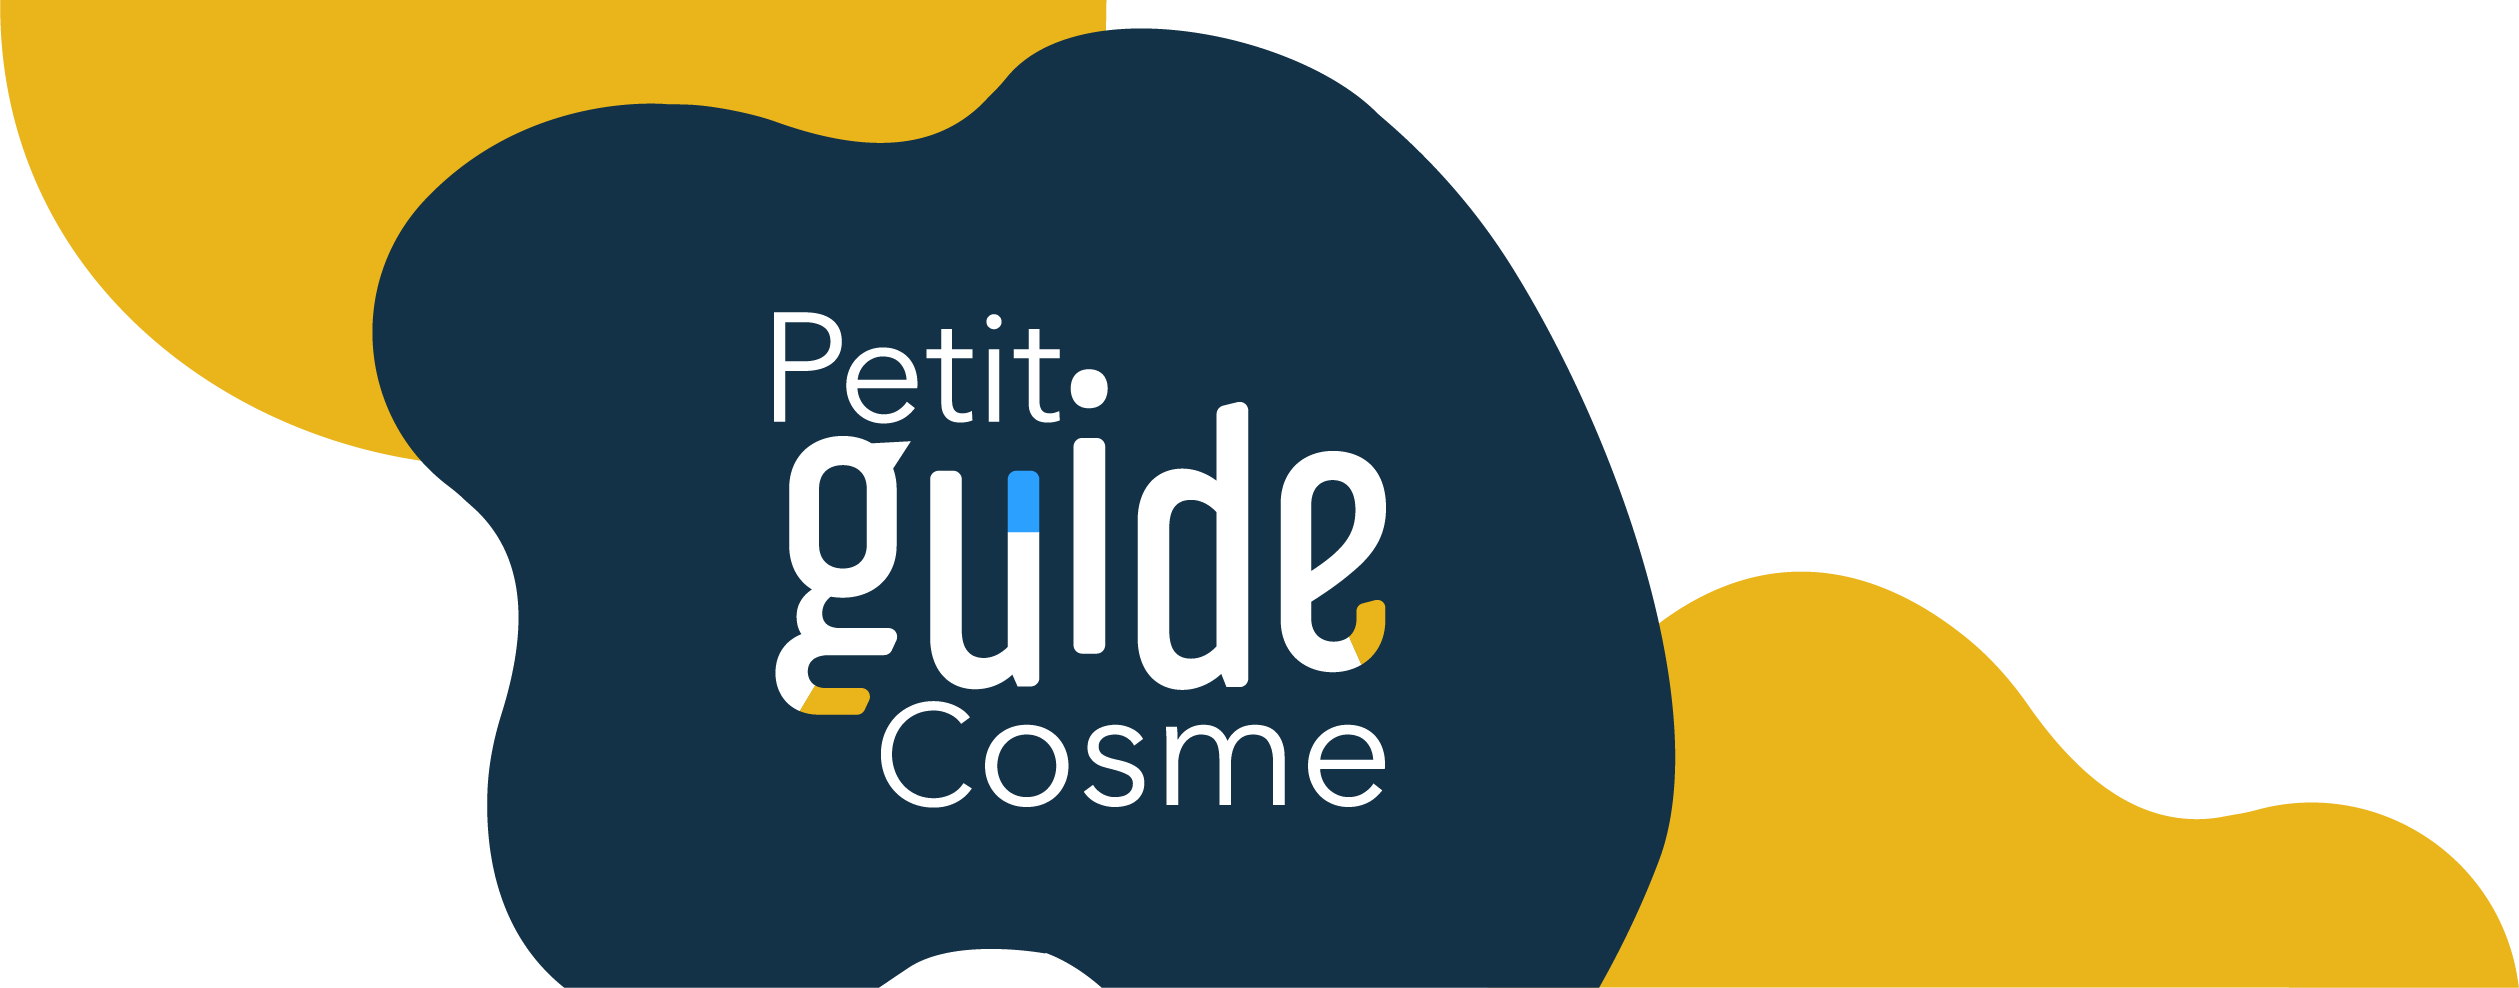 Petit Guide Cosme